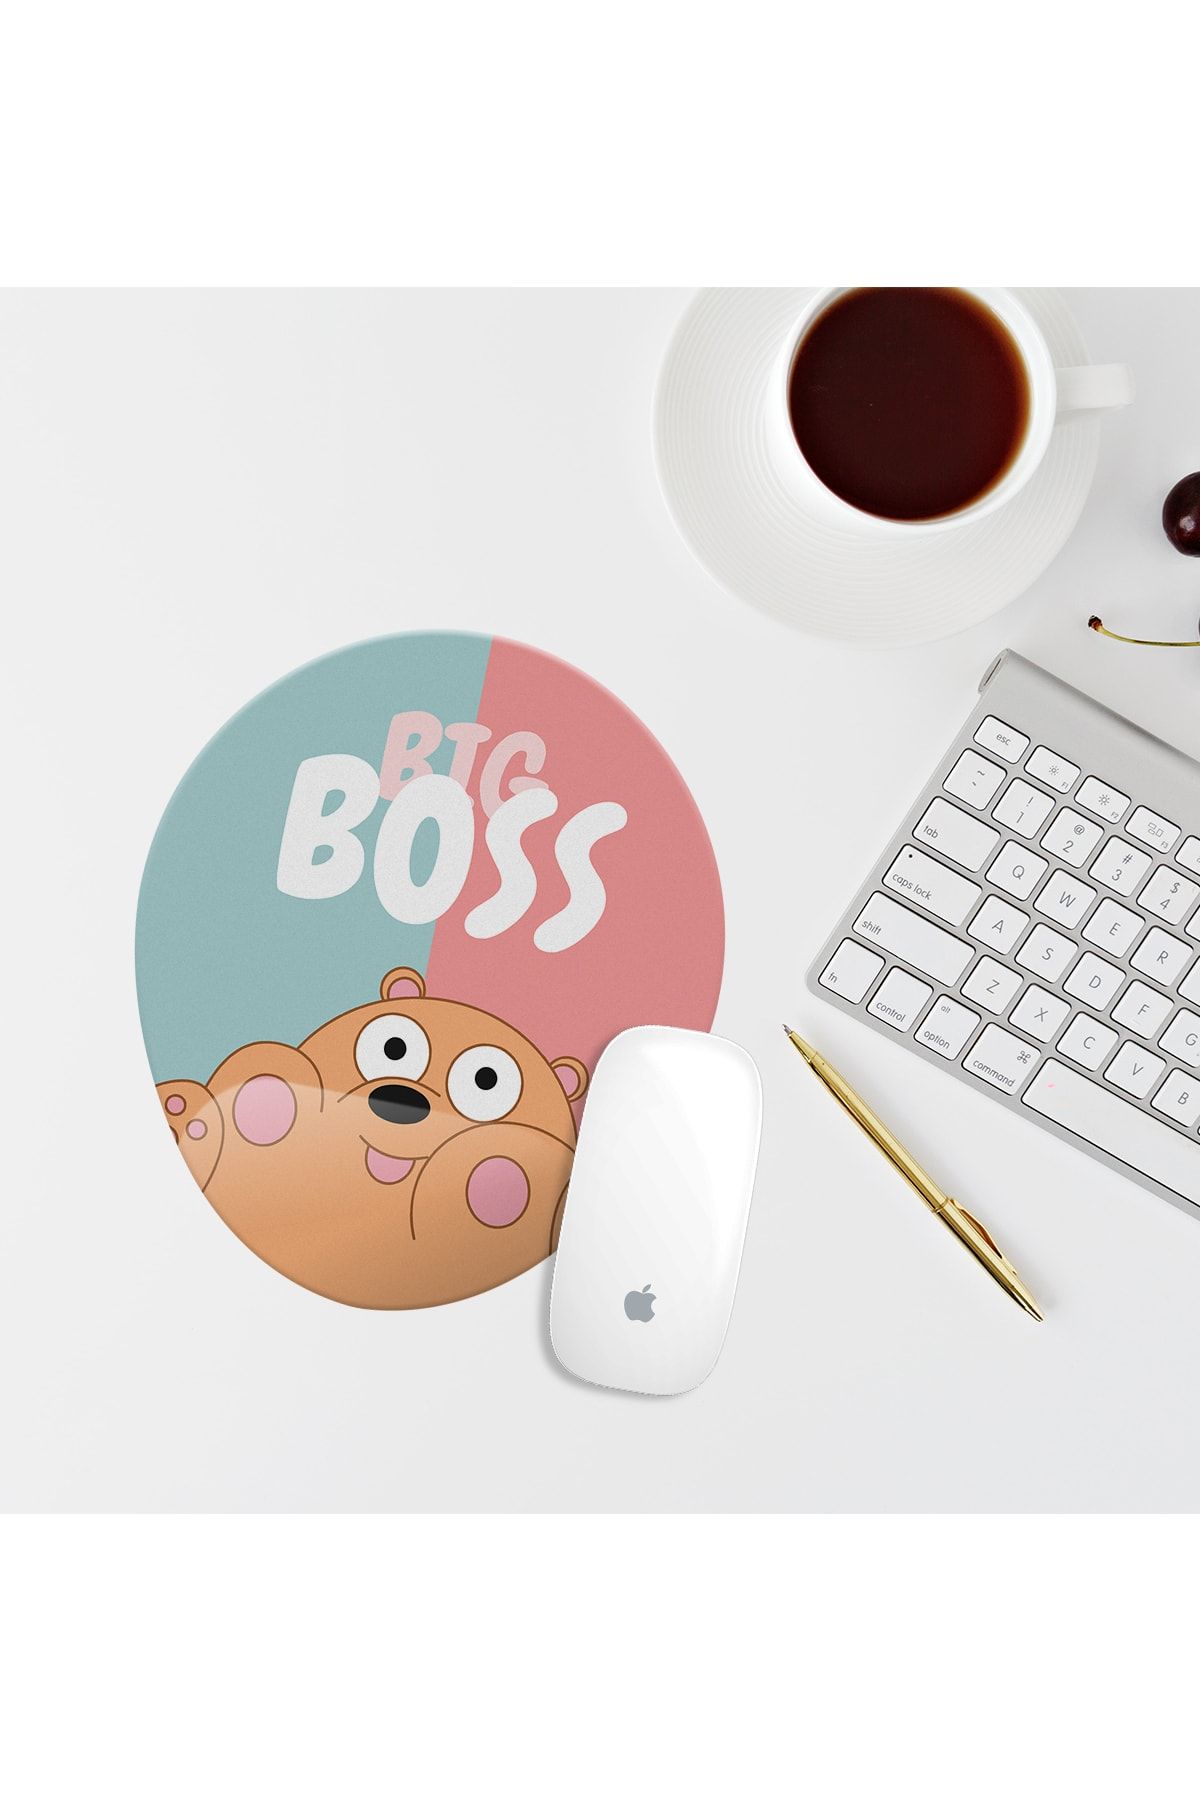 Özer Store Big Boss Ayıcıklı Bilek Destekli Oval Mouse Pad